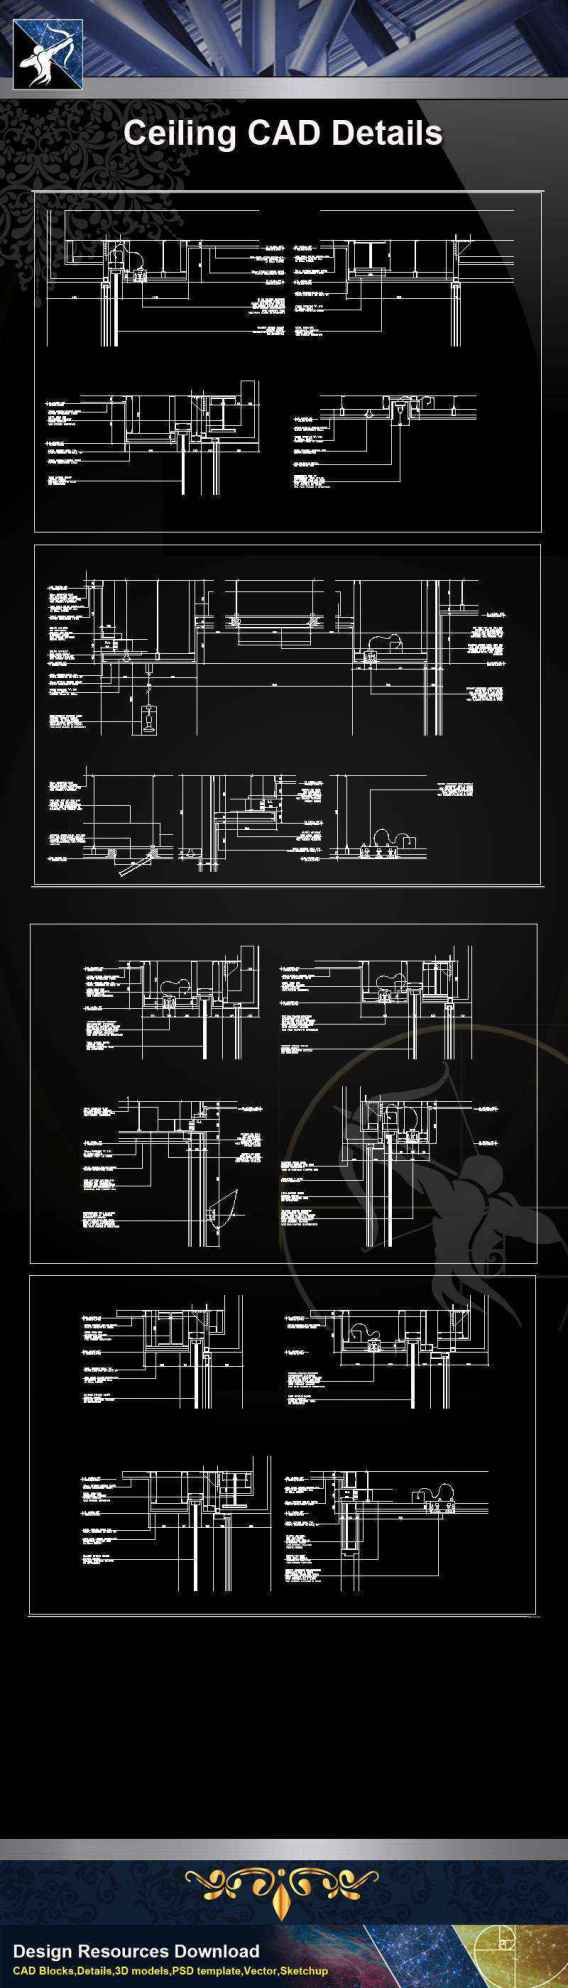 【Architecture CAD Details Collections】Ceiling Design CAD Details V.2